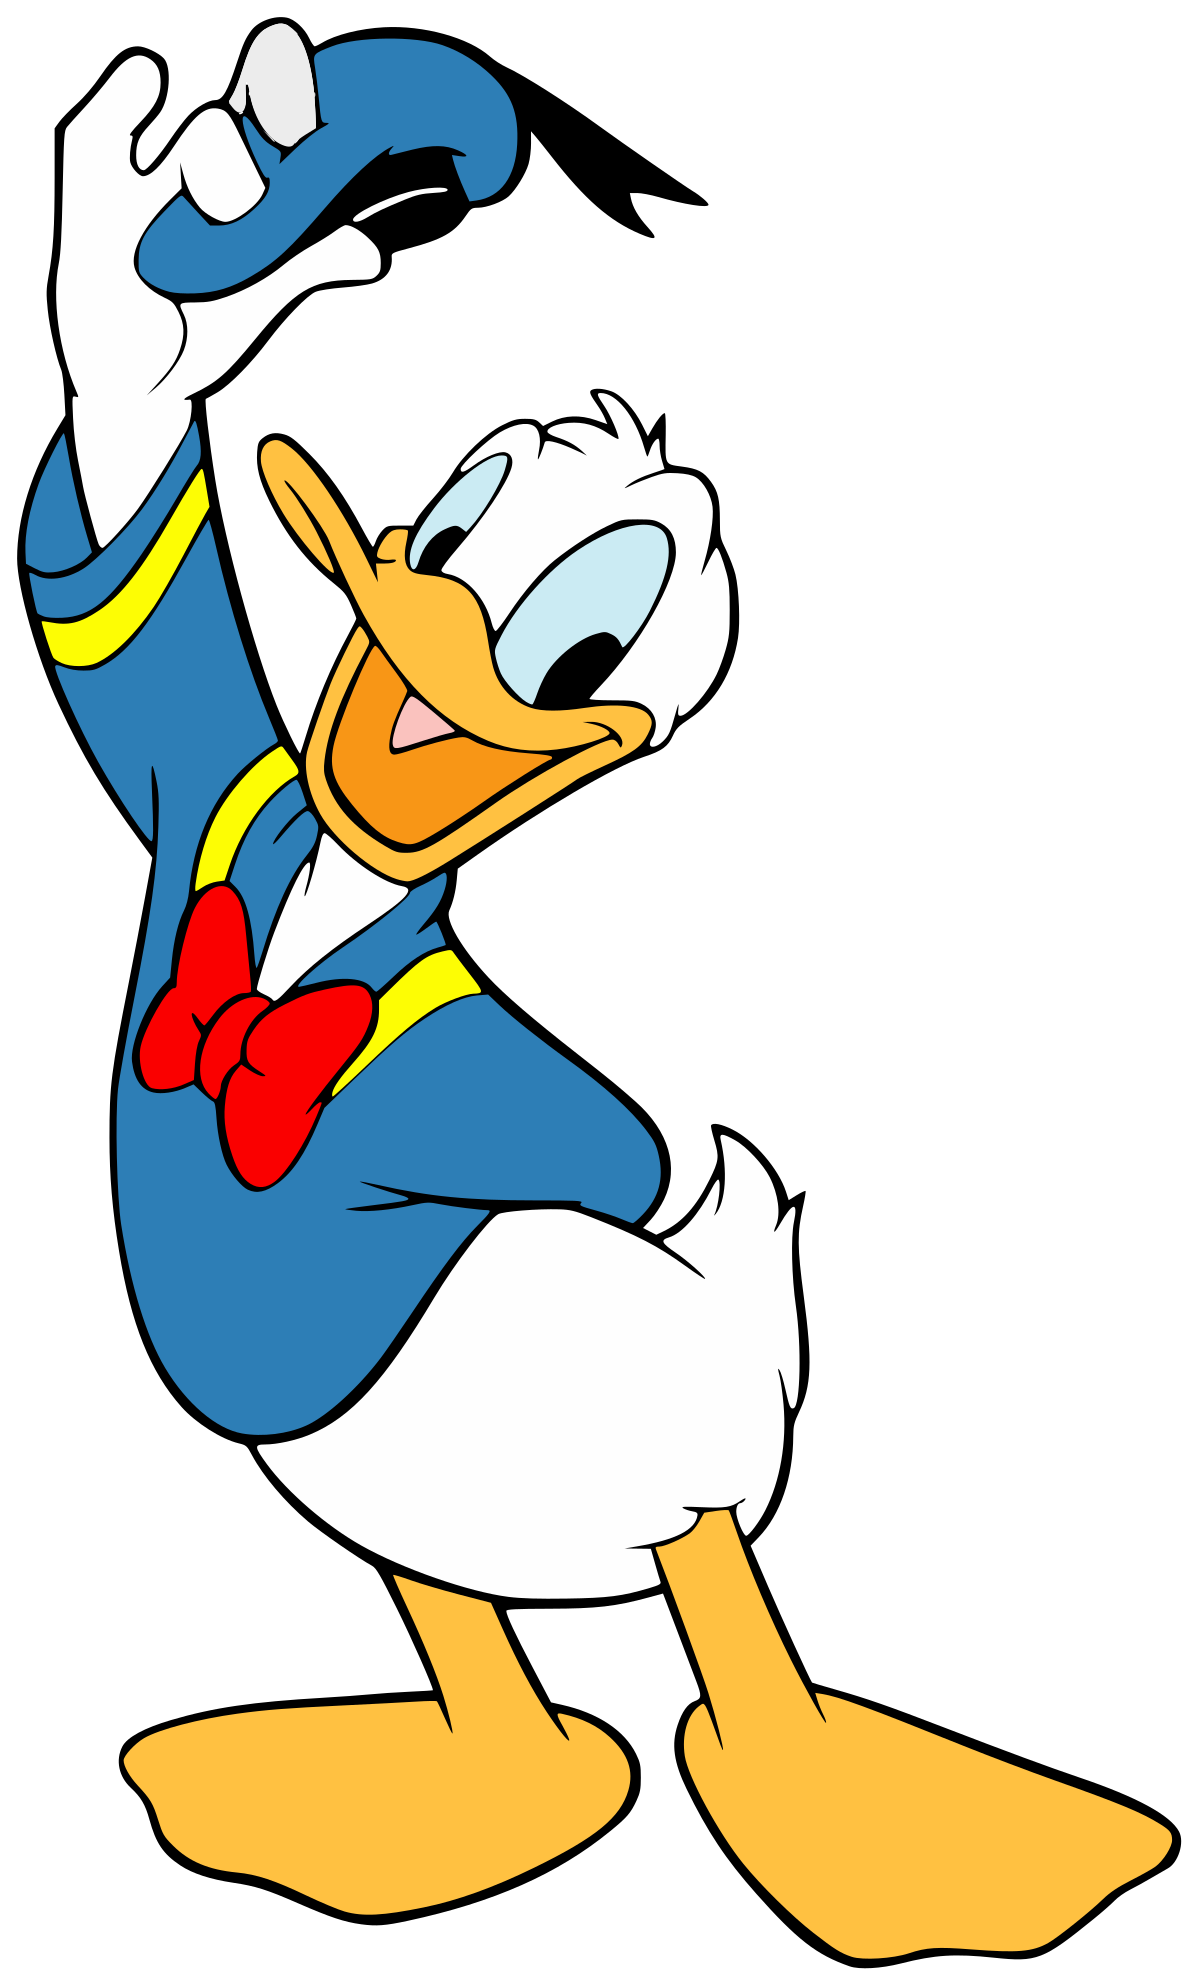 Donald duck wikipedia . Ducks clipart short animal